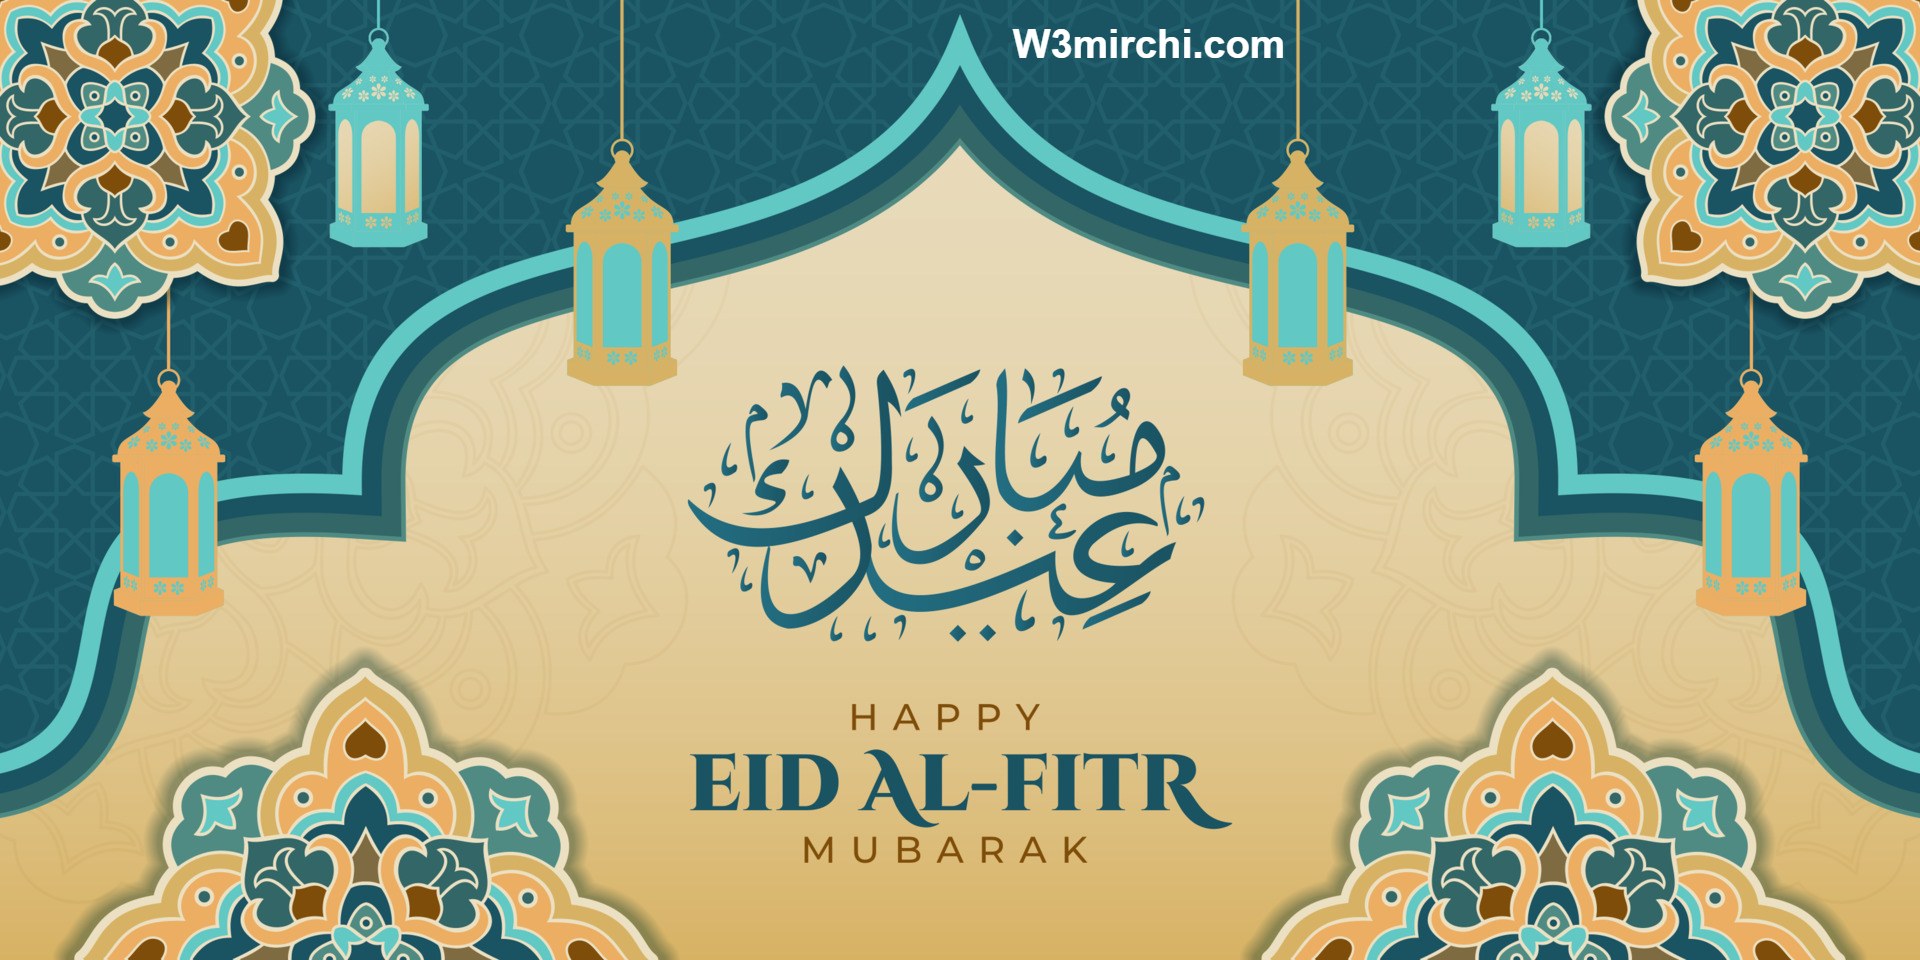 Happy Eid Al- Fitr Mubarak